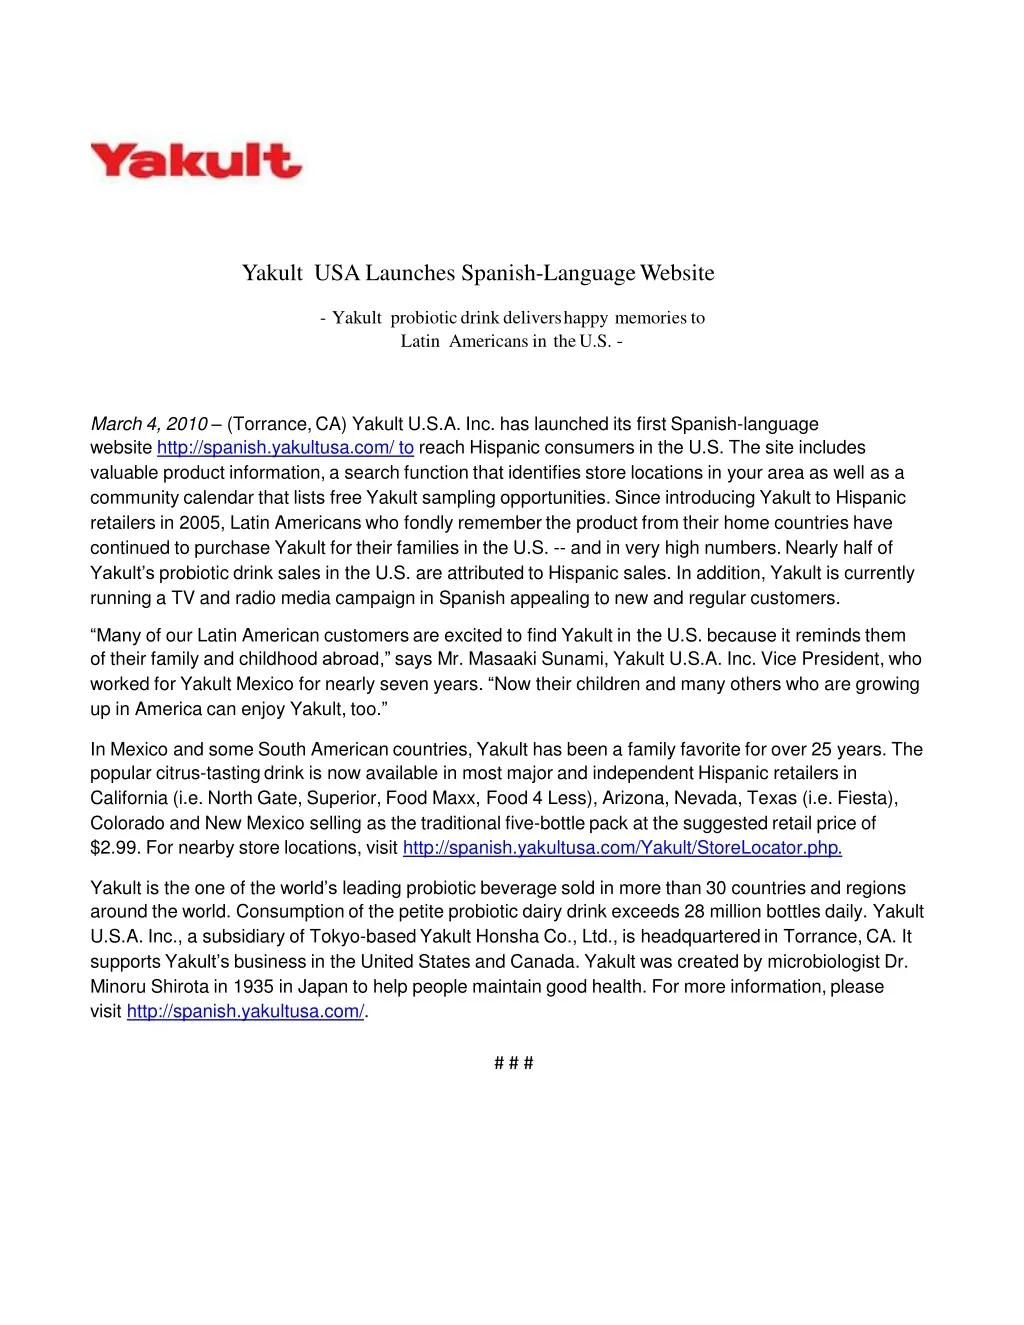 yakult usa launches spa n ish language website